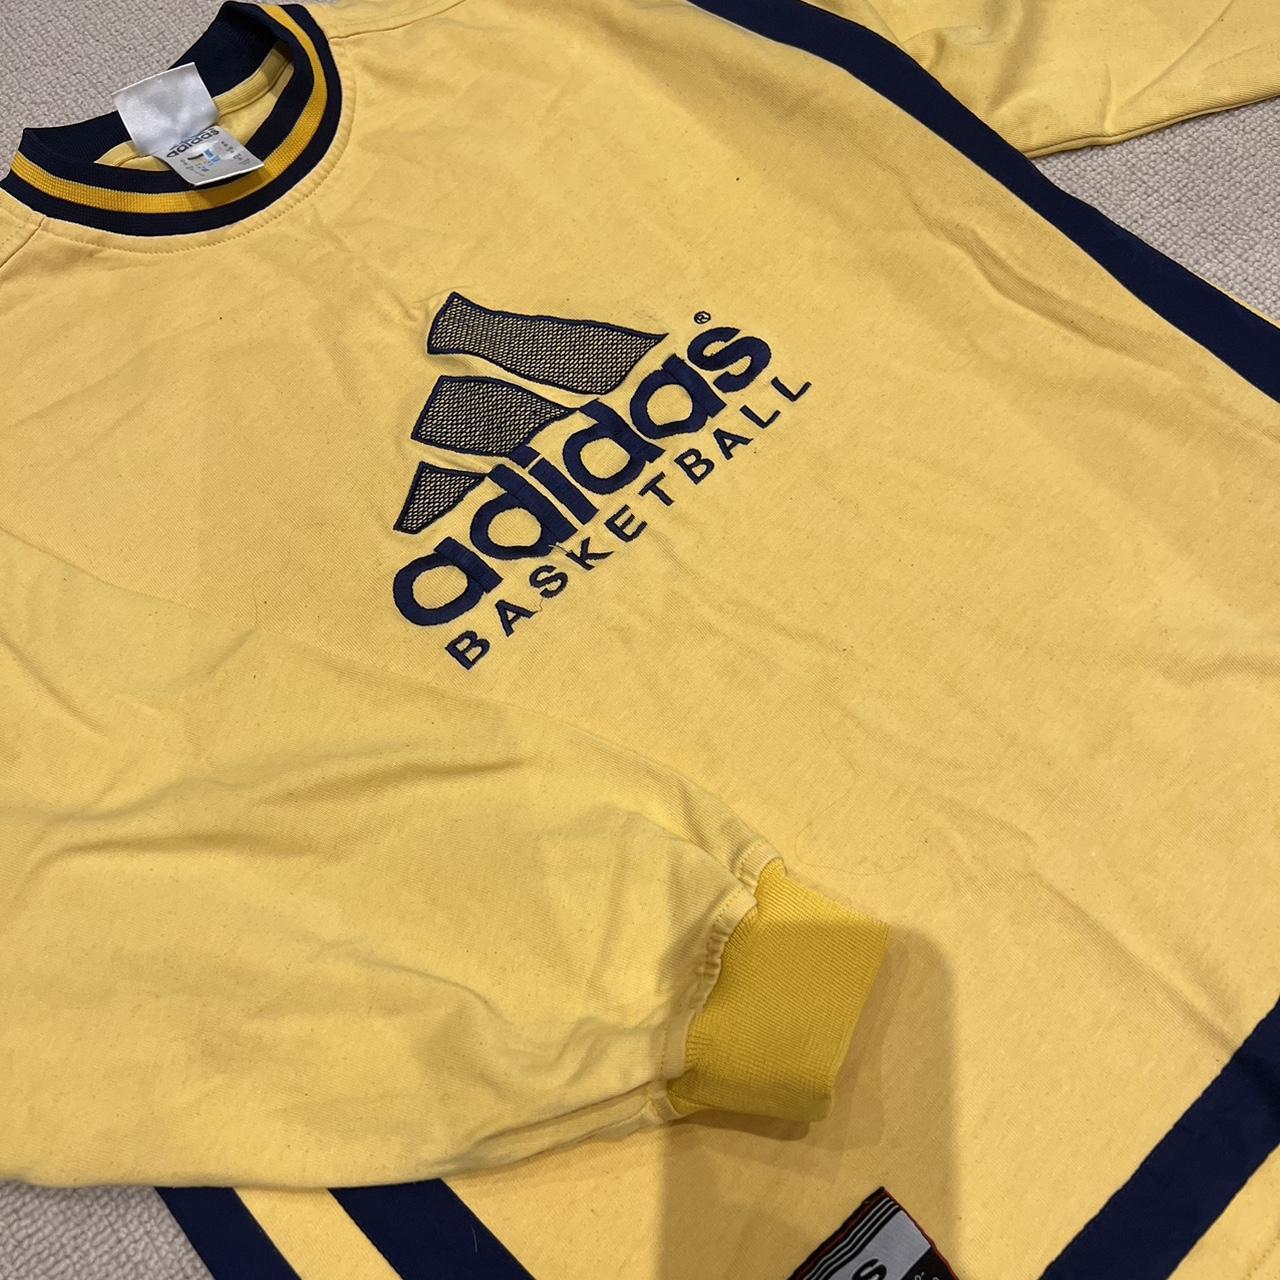 2015/16 NBA GSW Adidas Training Shirt (Large). Would - Depop